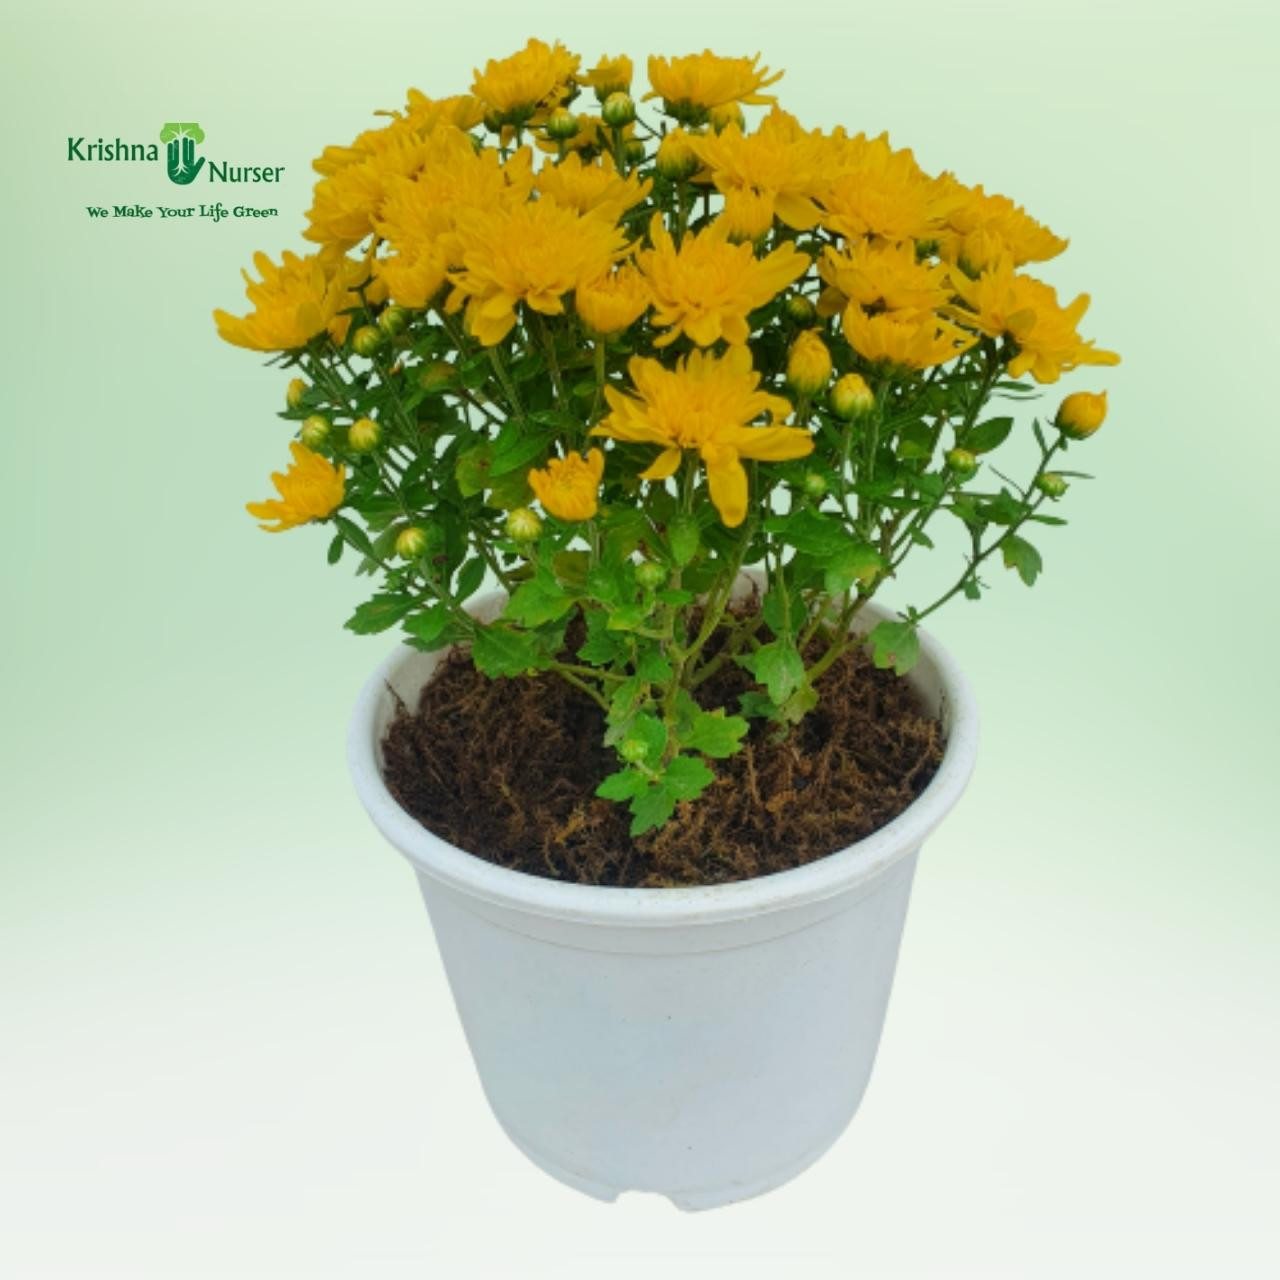 chrysanthemum-plant-yellow-flower